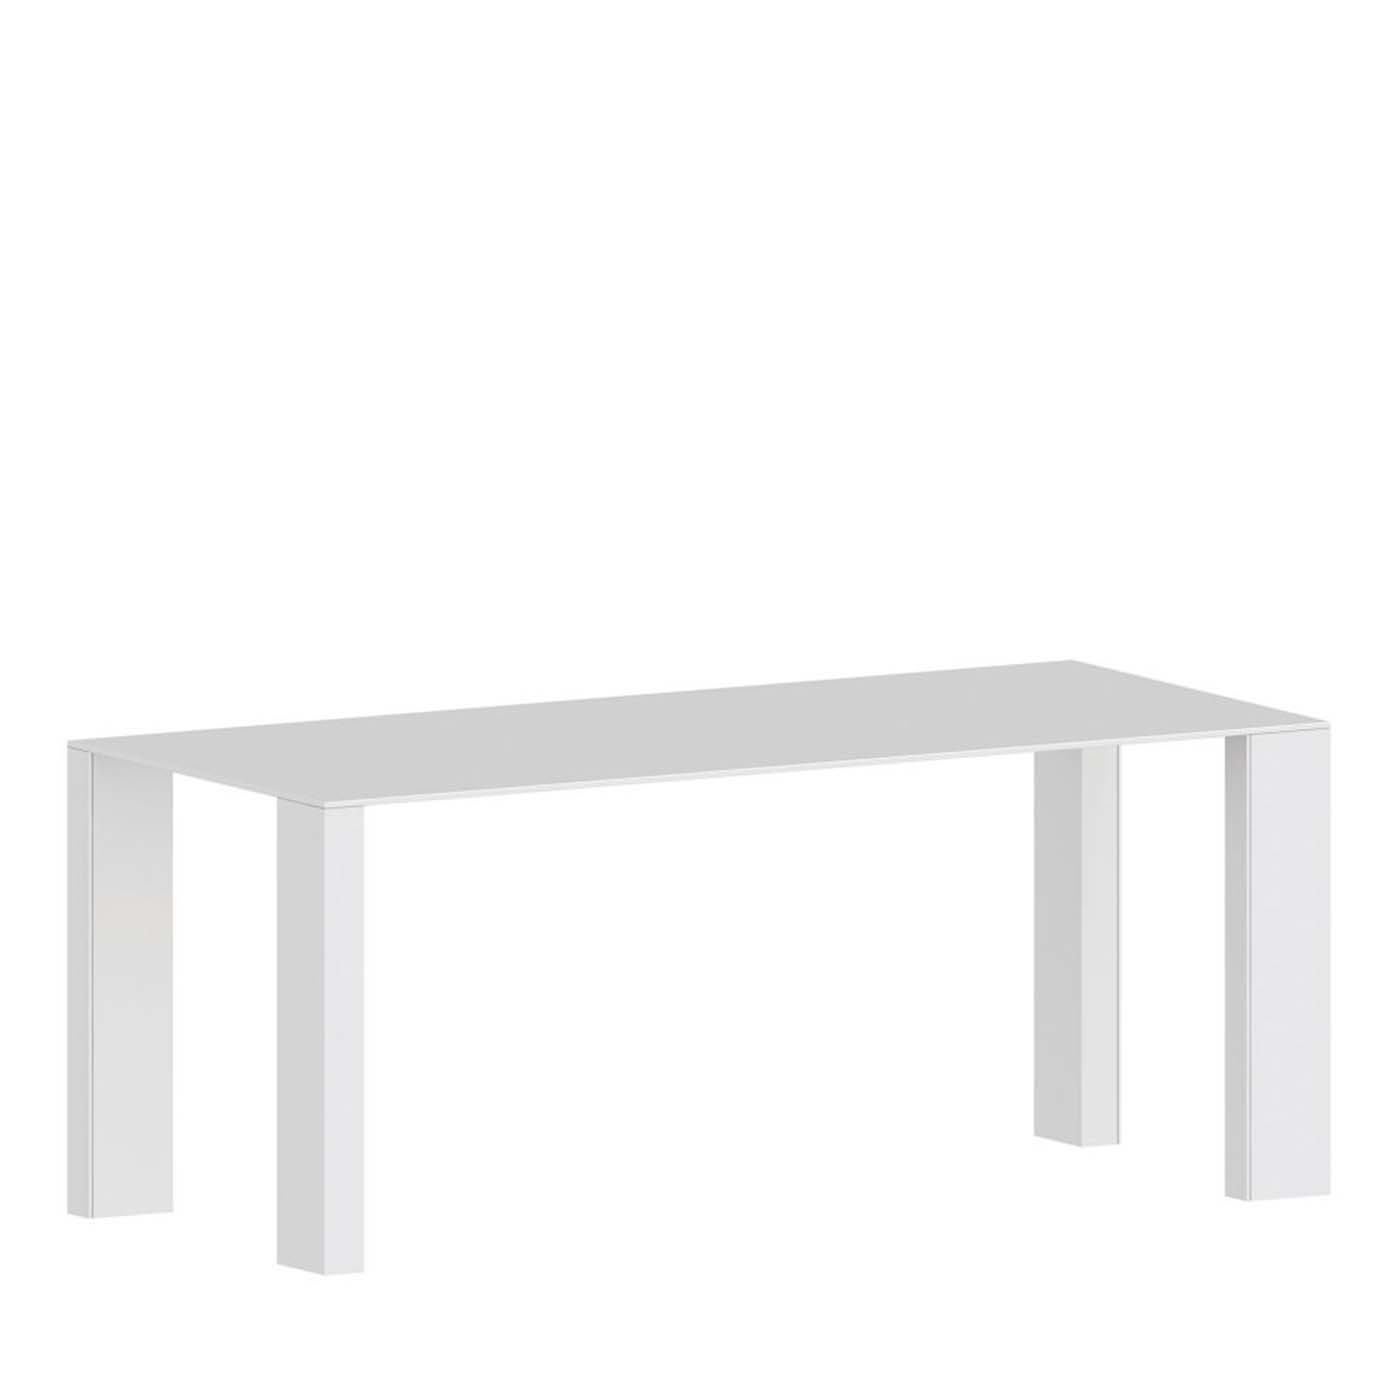 Big Gim White Table by Franco Raggi - Zeus